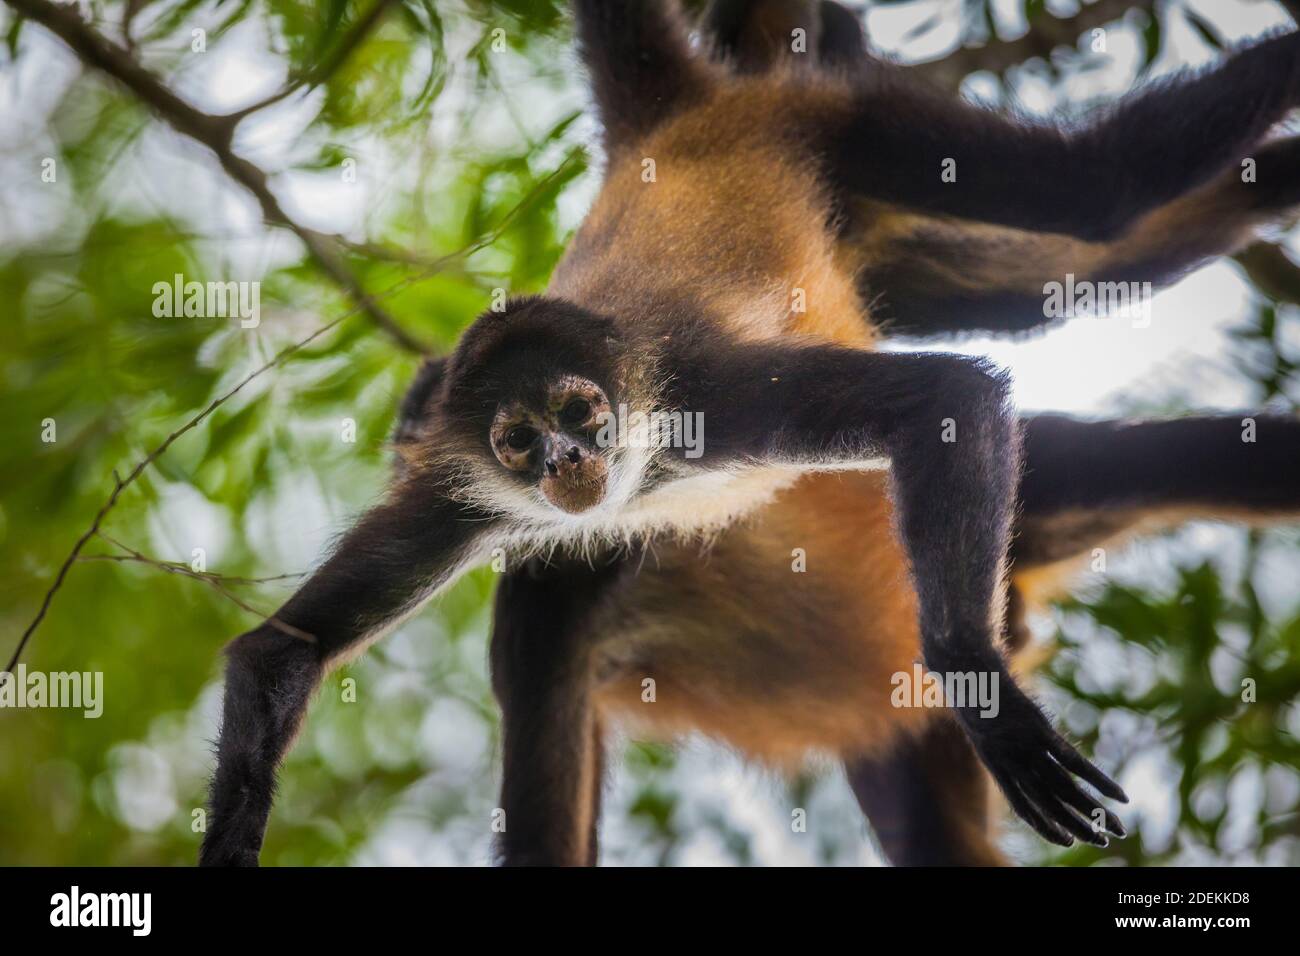 Azuero Spider Monkeys, Ateles geoffroyi azuerensis, inside the dense rainforest of Cerro Hoya national park, Veraguas province, Republic of Panama. Stock Photo